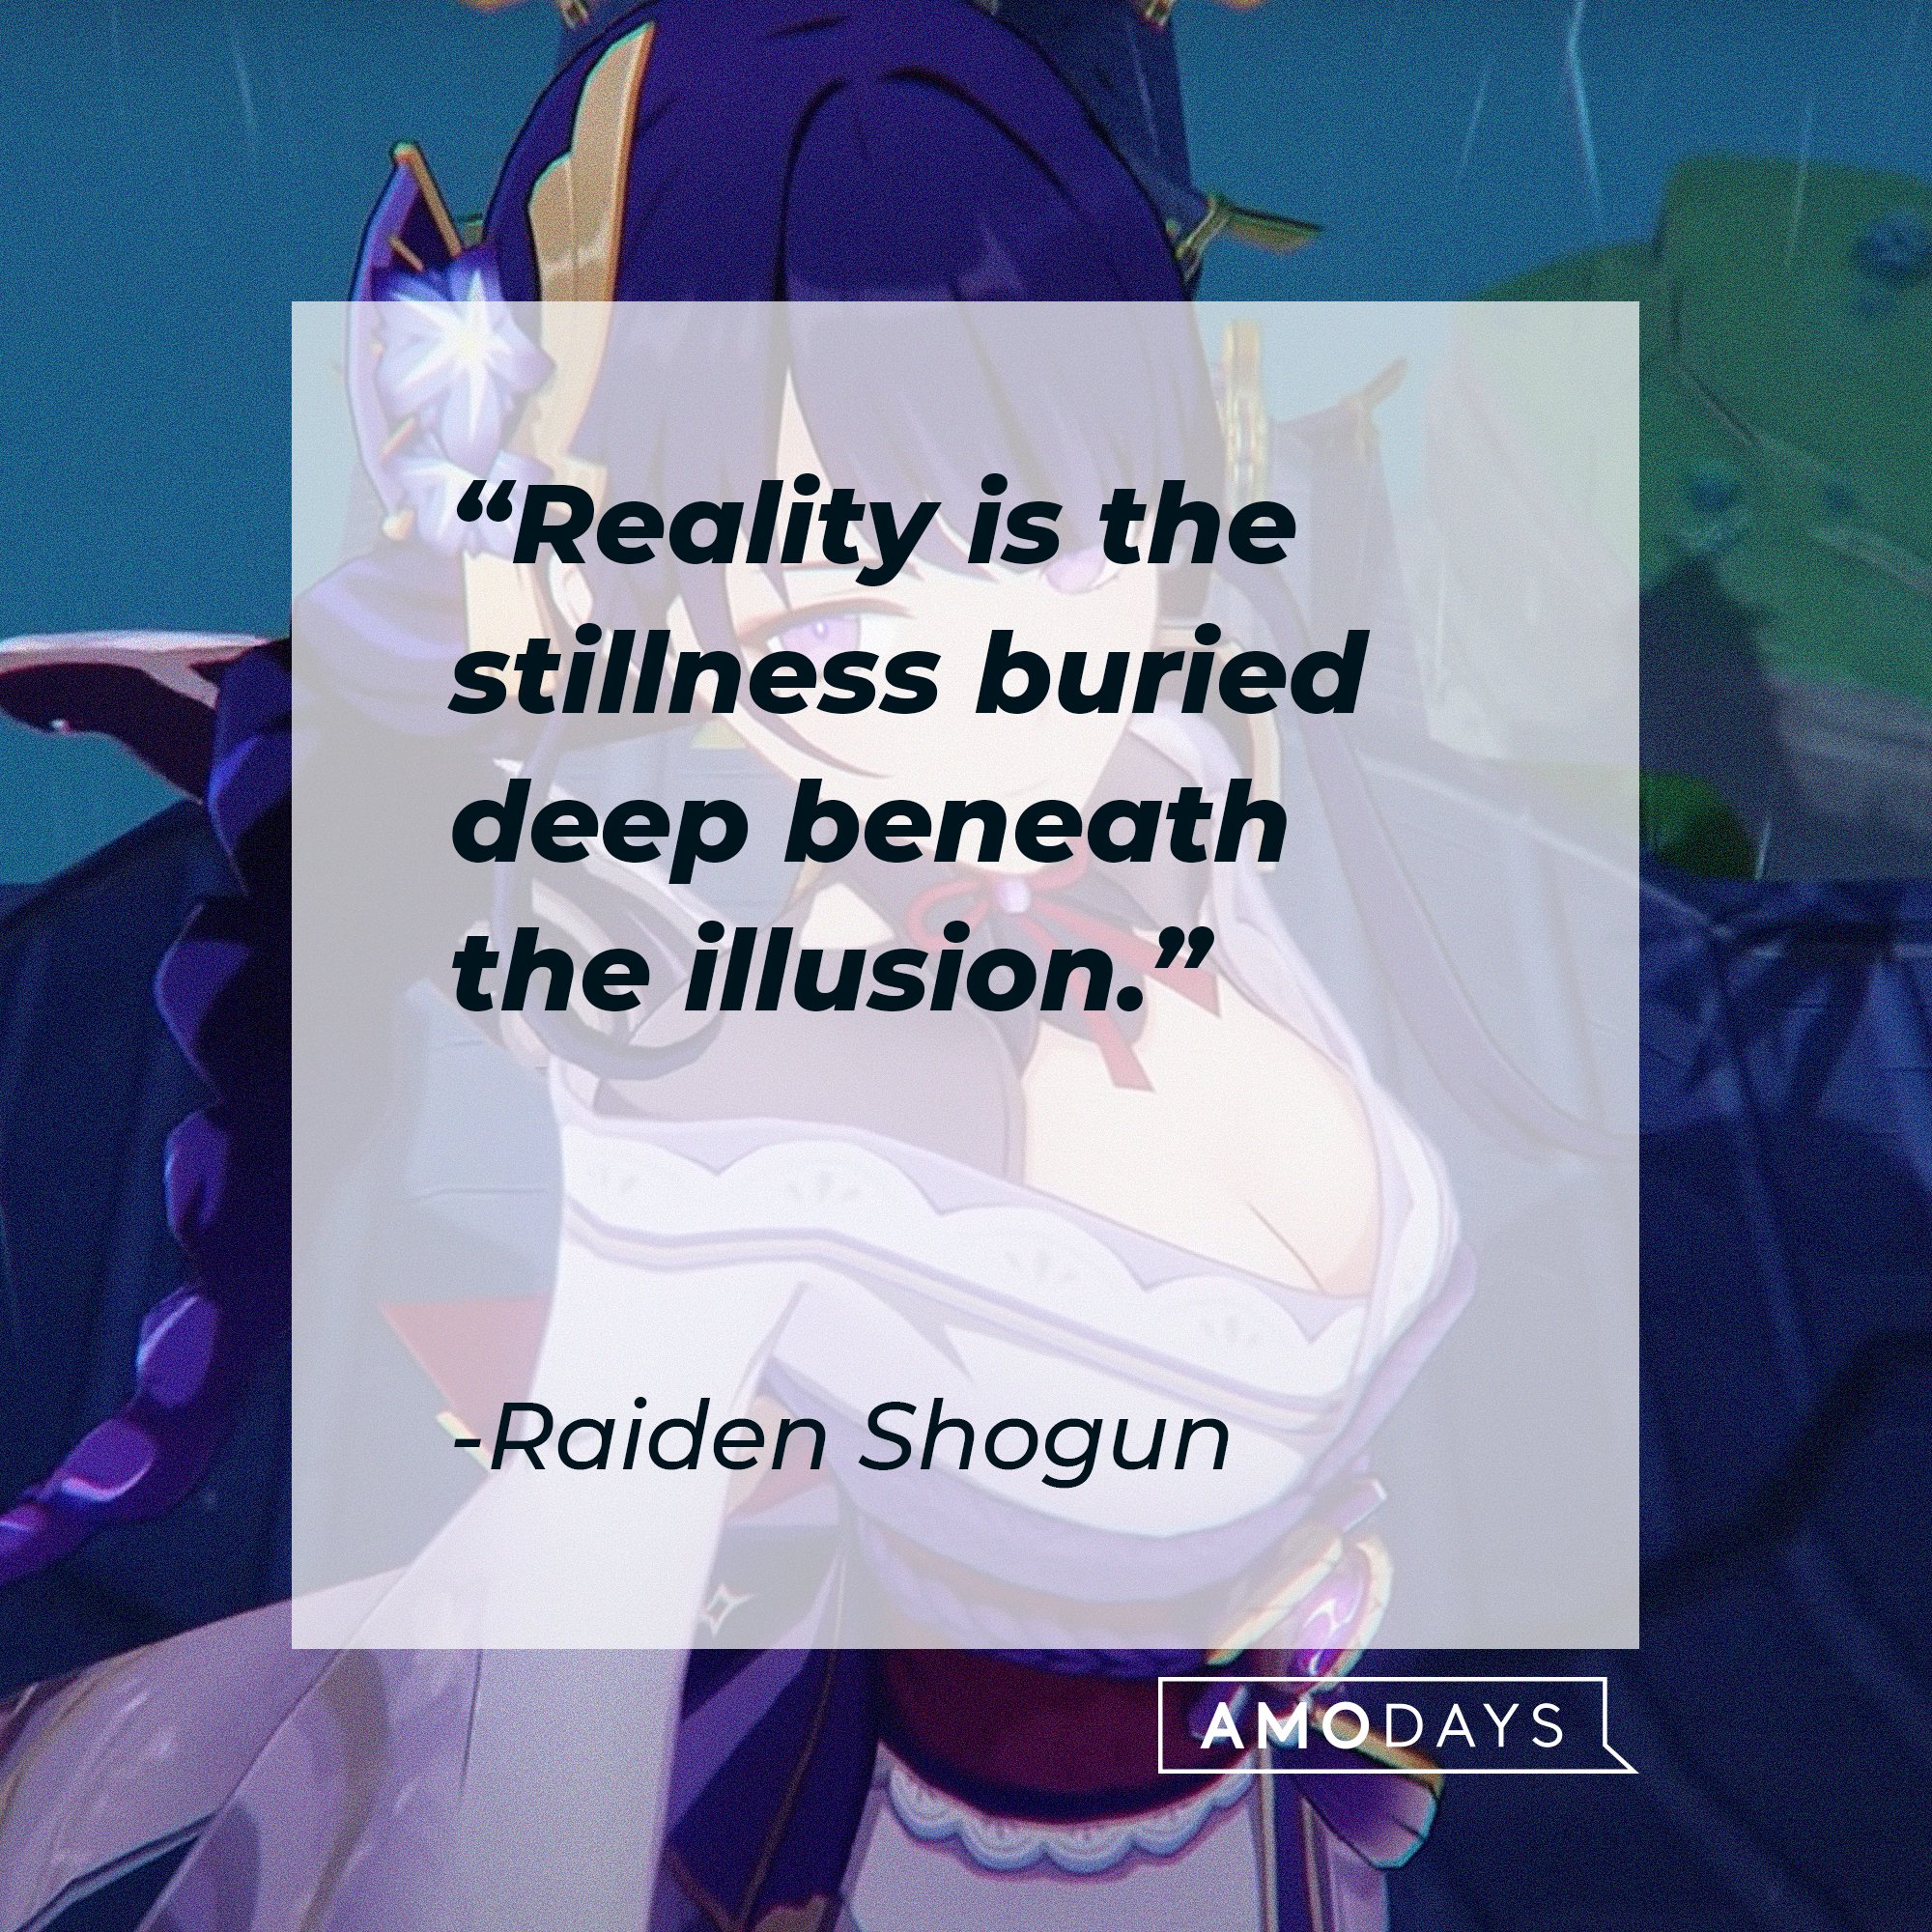 Raiden Shogun's quote: "Reality is the stillness buried deep beneath the illusion." | Image: AmoDays